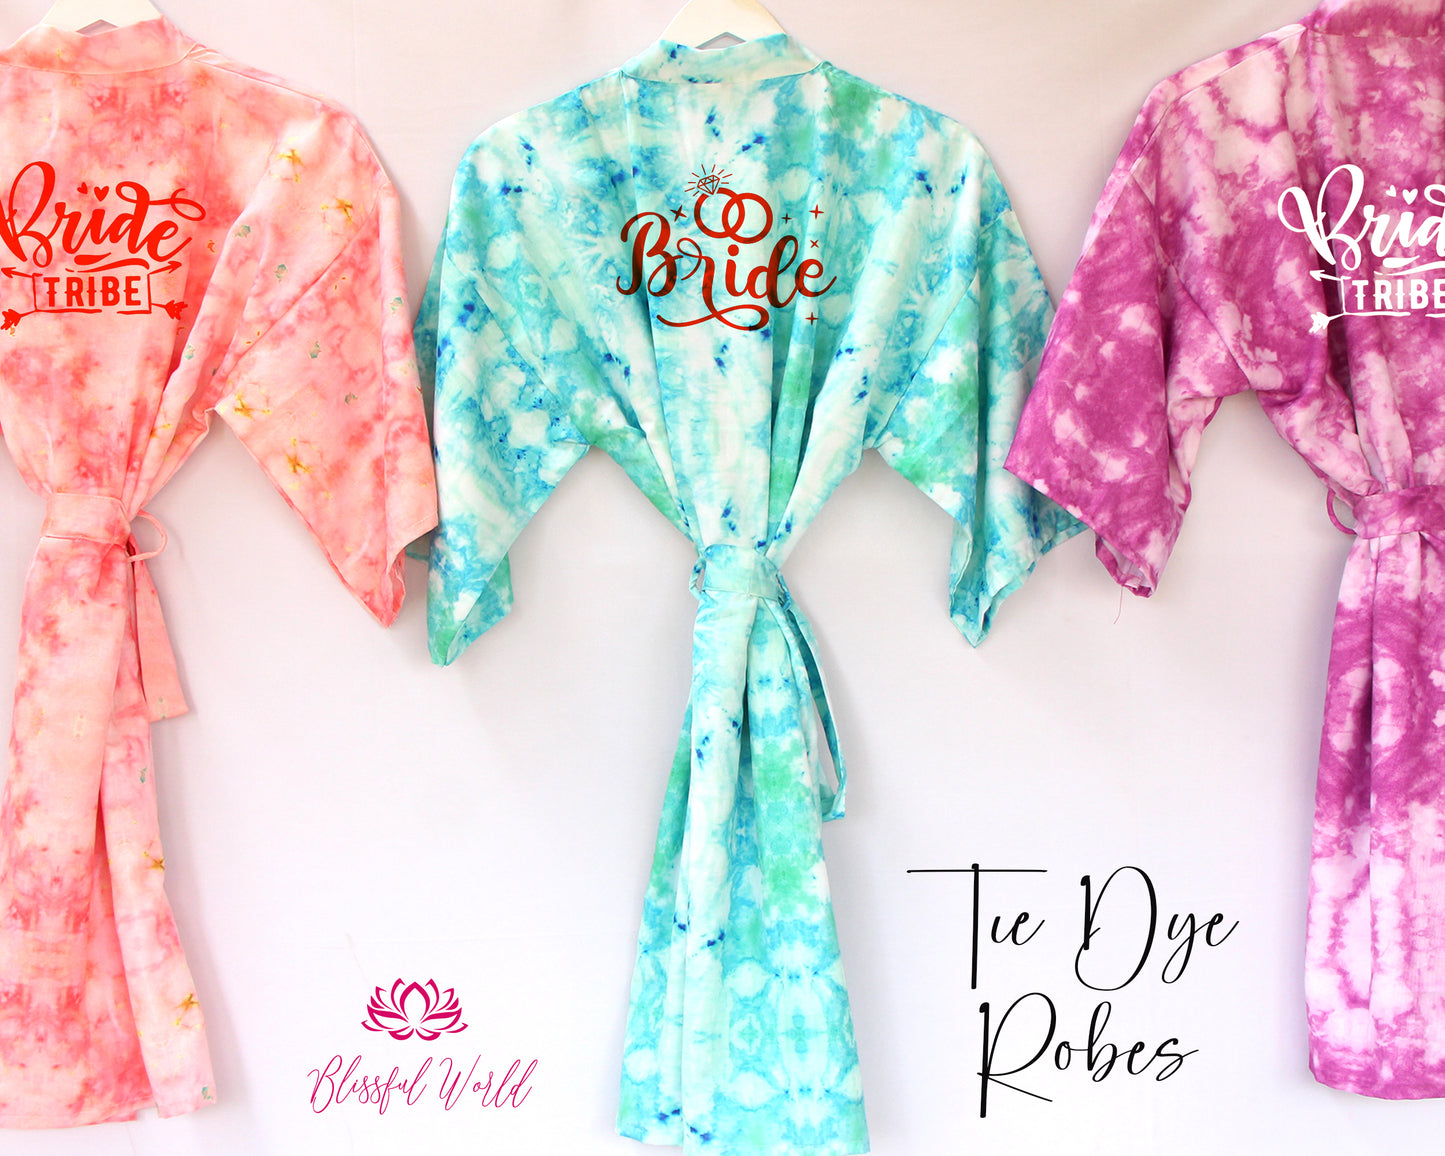 Personalized Tie Dye Robes, Cotton Tie Dye Robes, Robe, Bridal Tie Dye Robes, Hen Party, Custom Text, 100% Cotton Tie Dye, Customized Robes, Party Robes